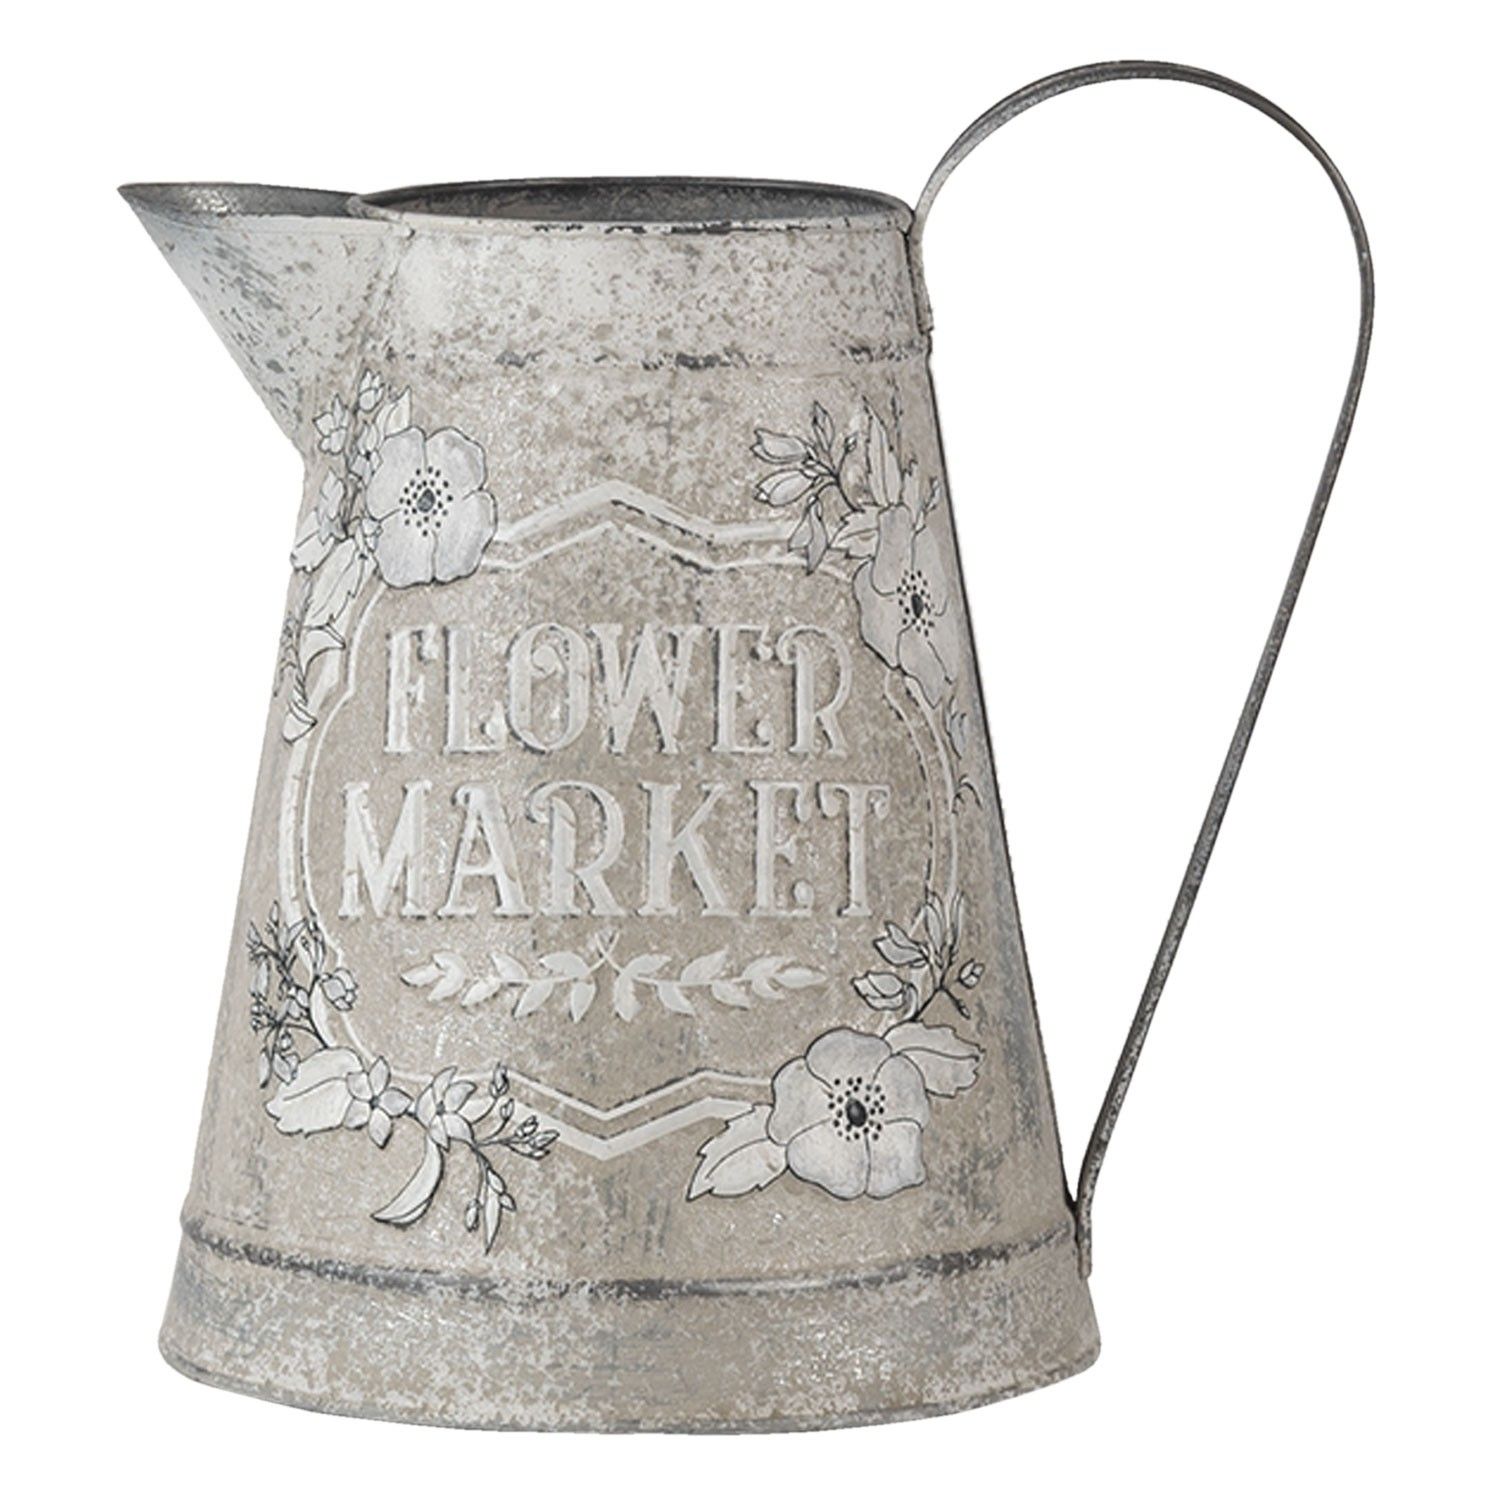 Dekorativní béžový džbán Flower market s patinou - 17*17*23 cm Clayre & Eef - LaHome - vintage dekorace